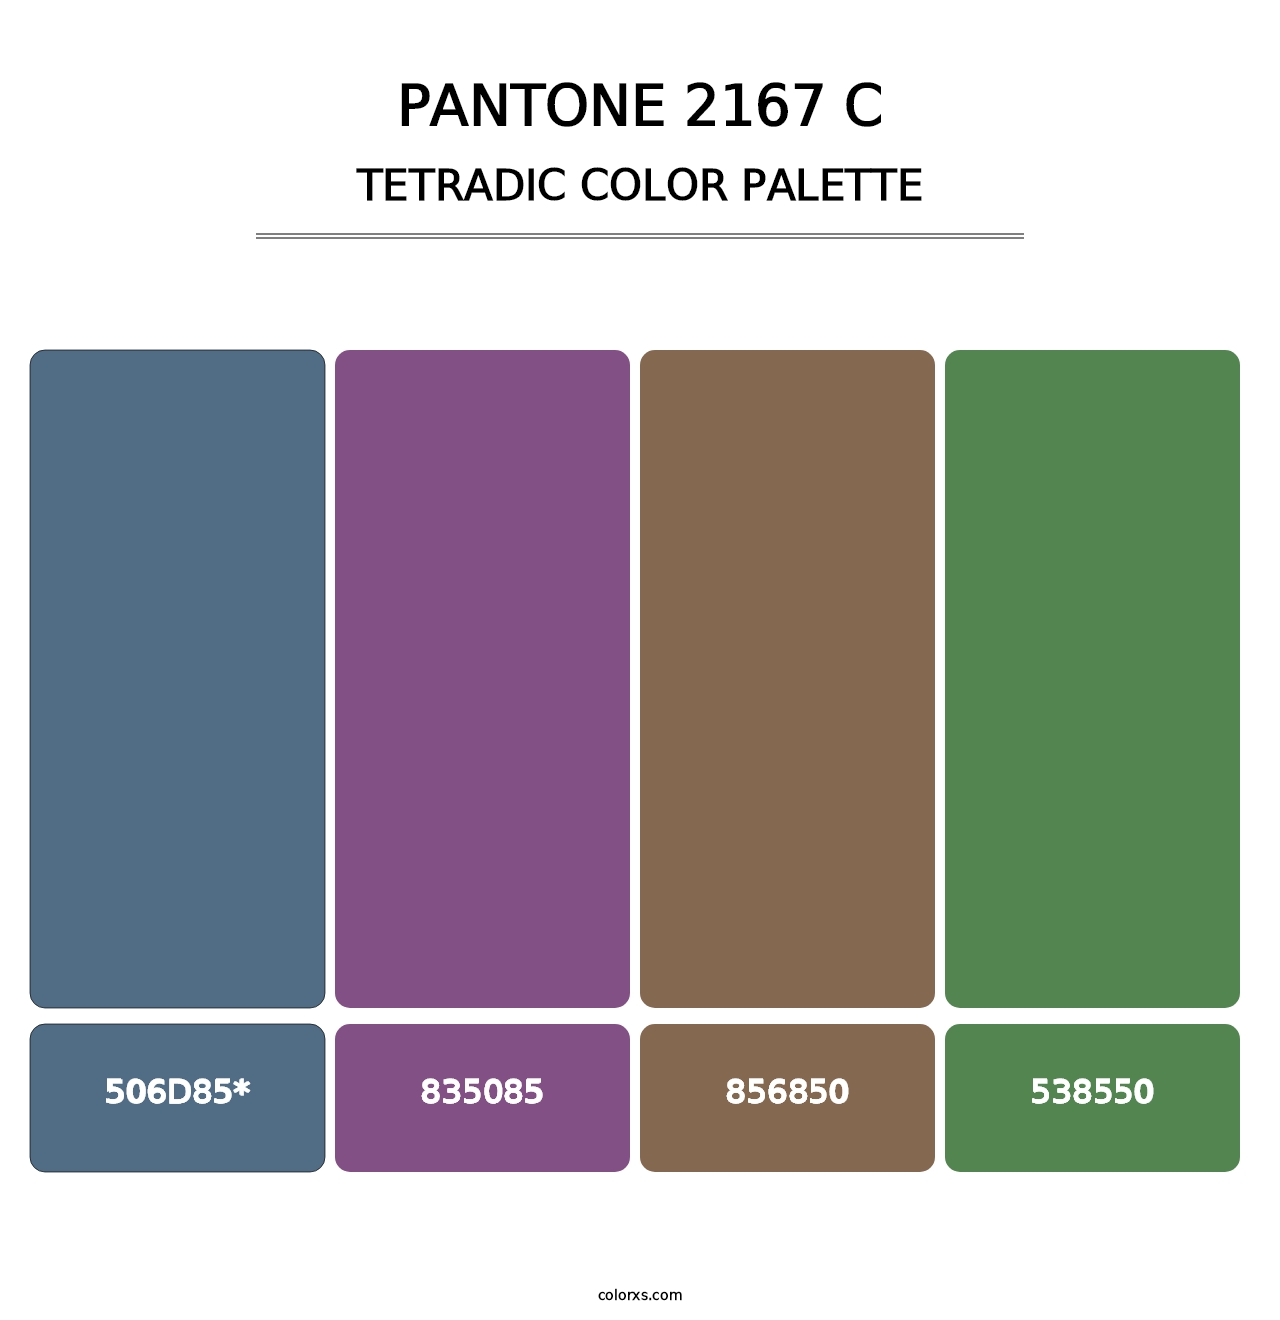 PANTONE 2167 C - Tetradic Color Palette